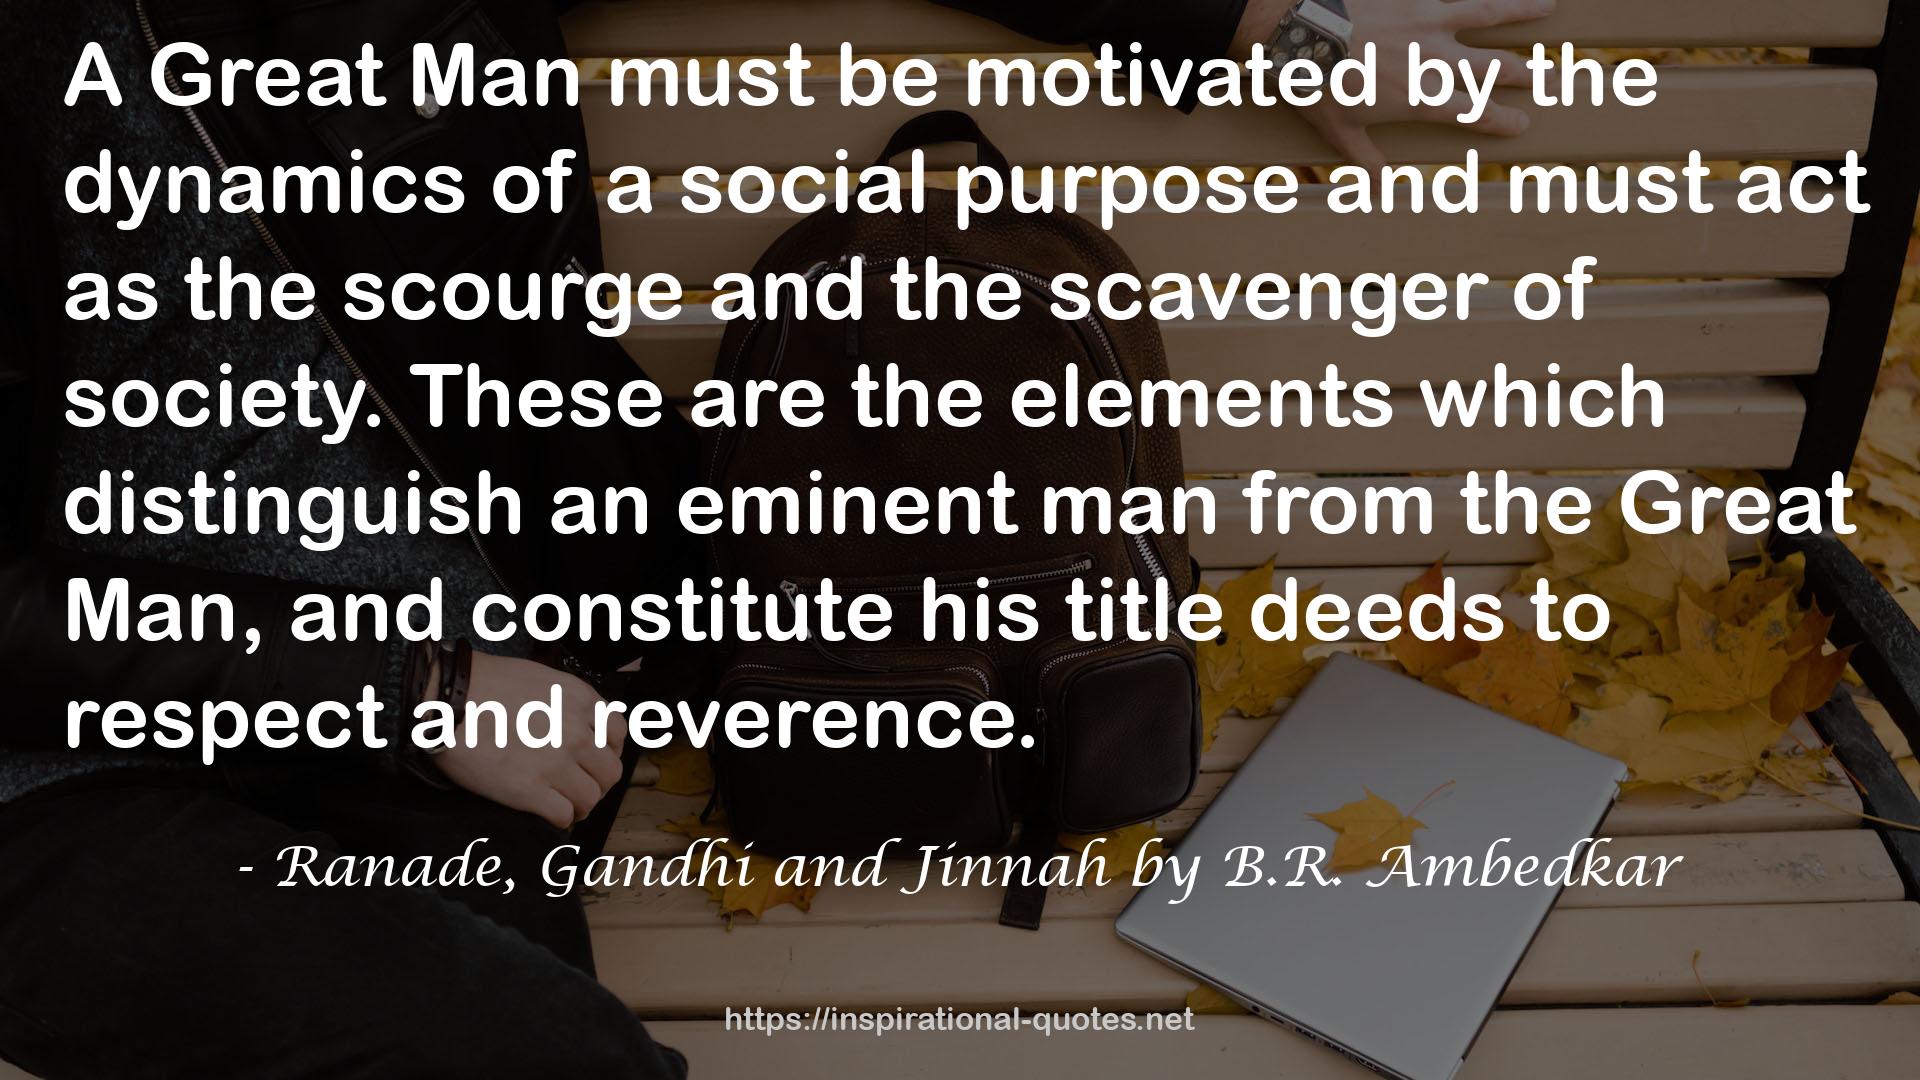 Ranade, Gandhi and Jinnah by B.R. Ambedkar QUOTES